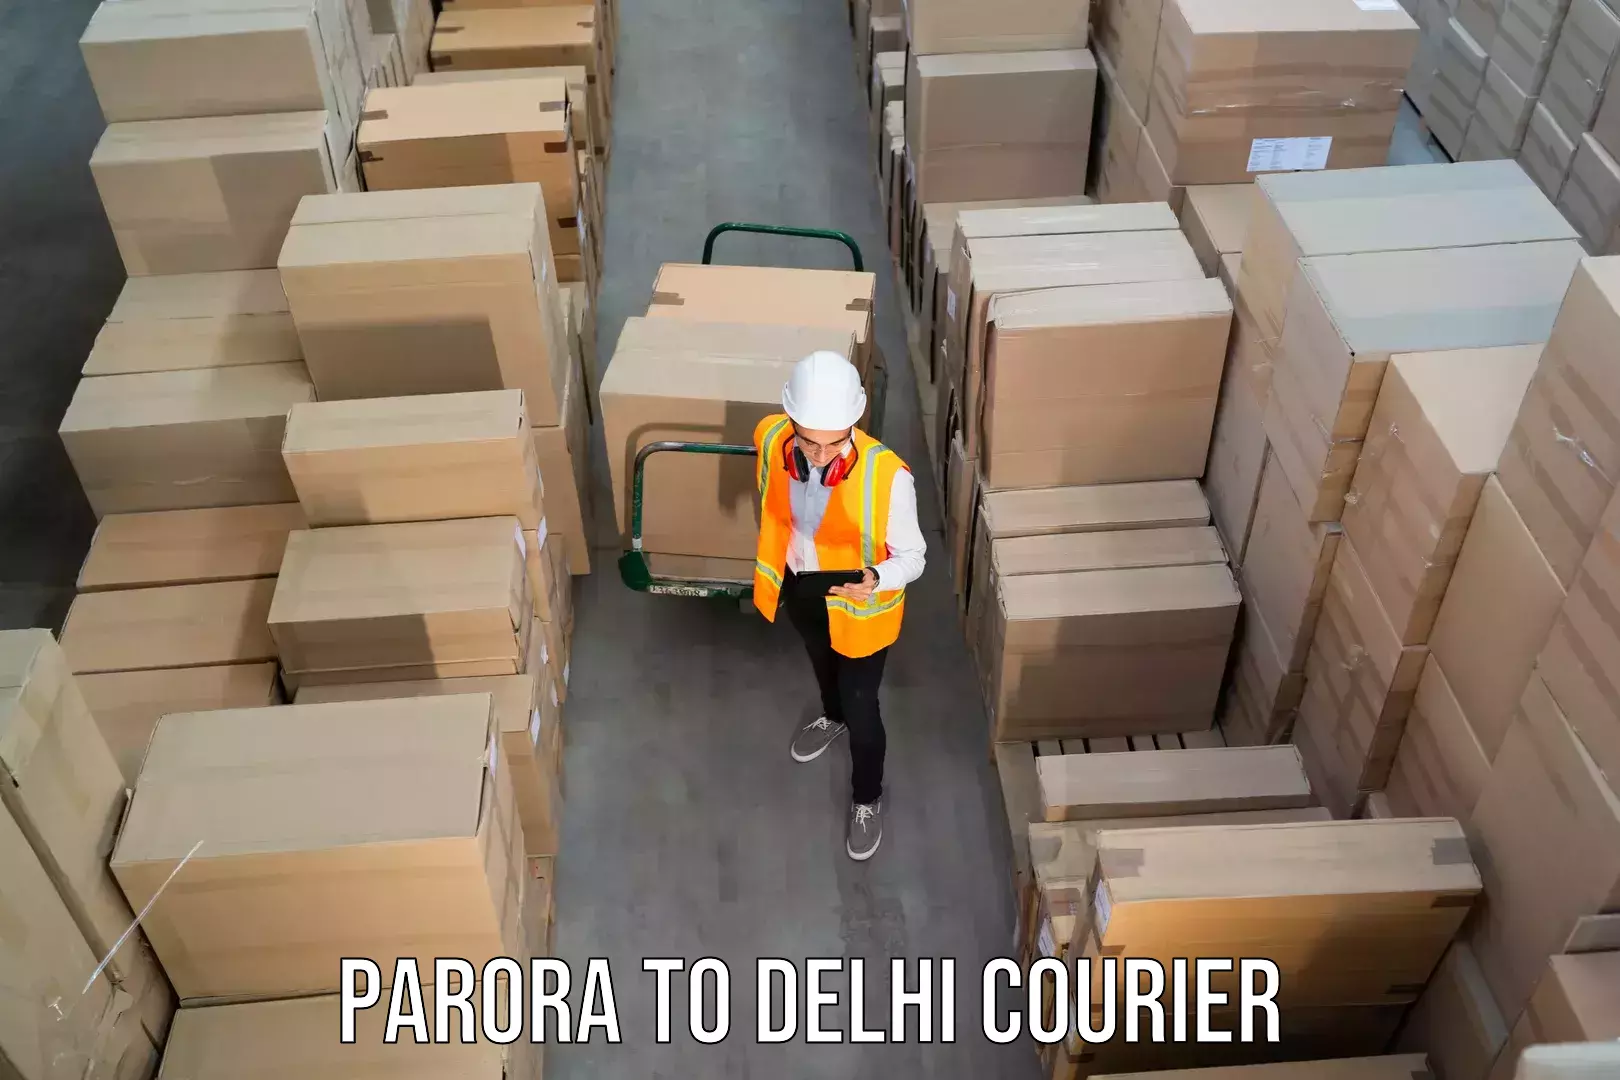 Express delivery capabilities Parora to Delhi